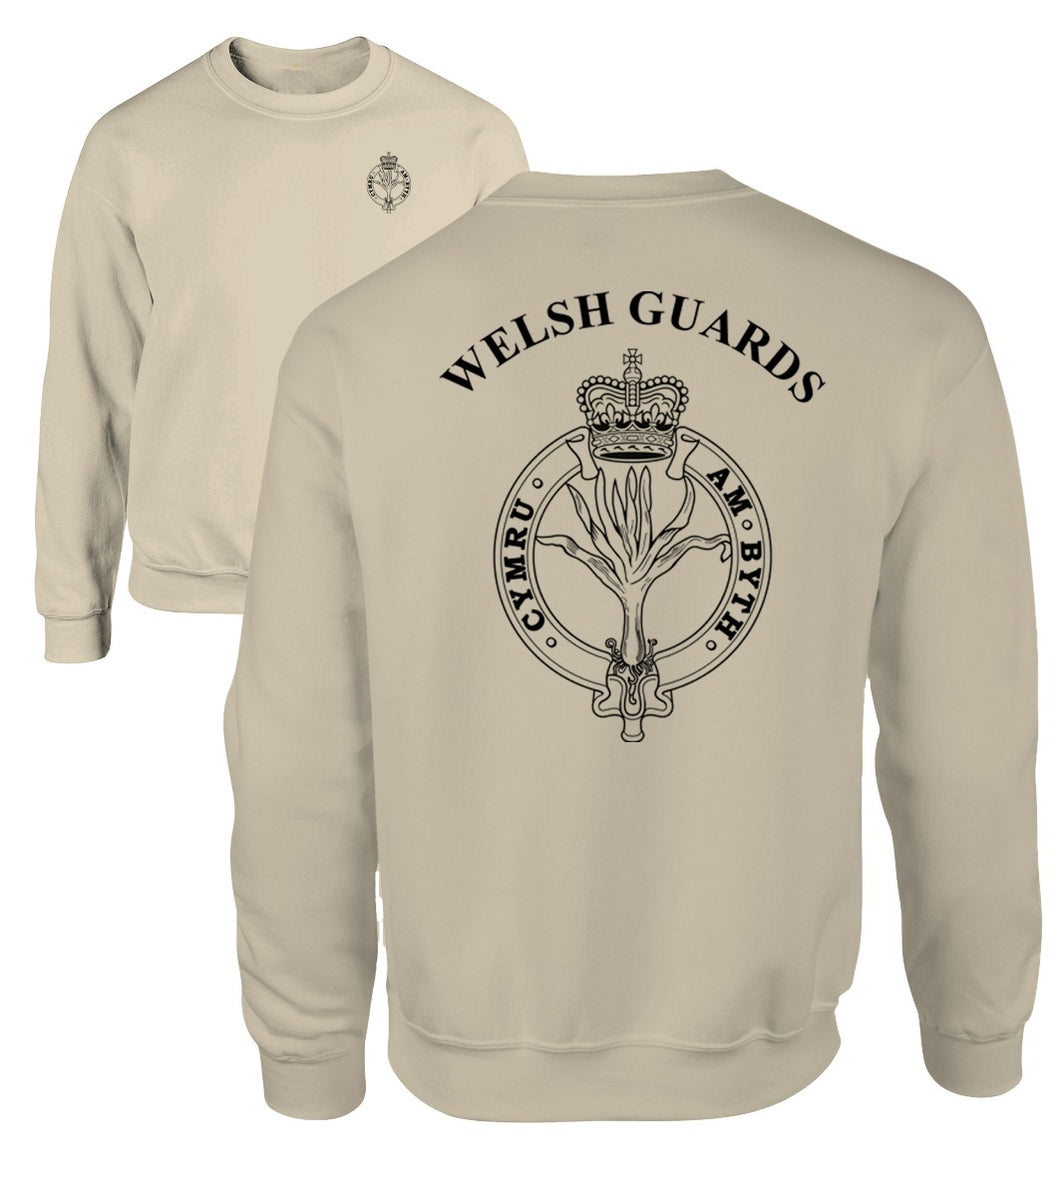 Double Printed Welsh Guards Sweatshirt